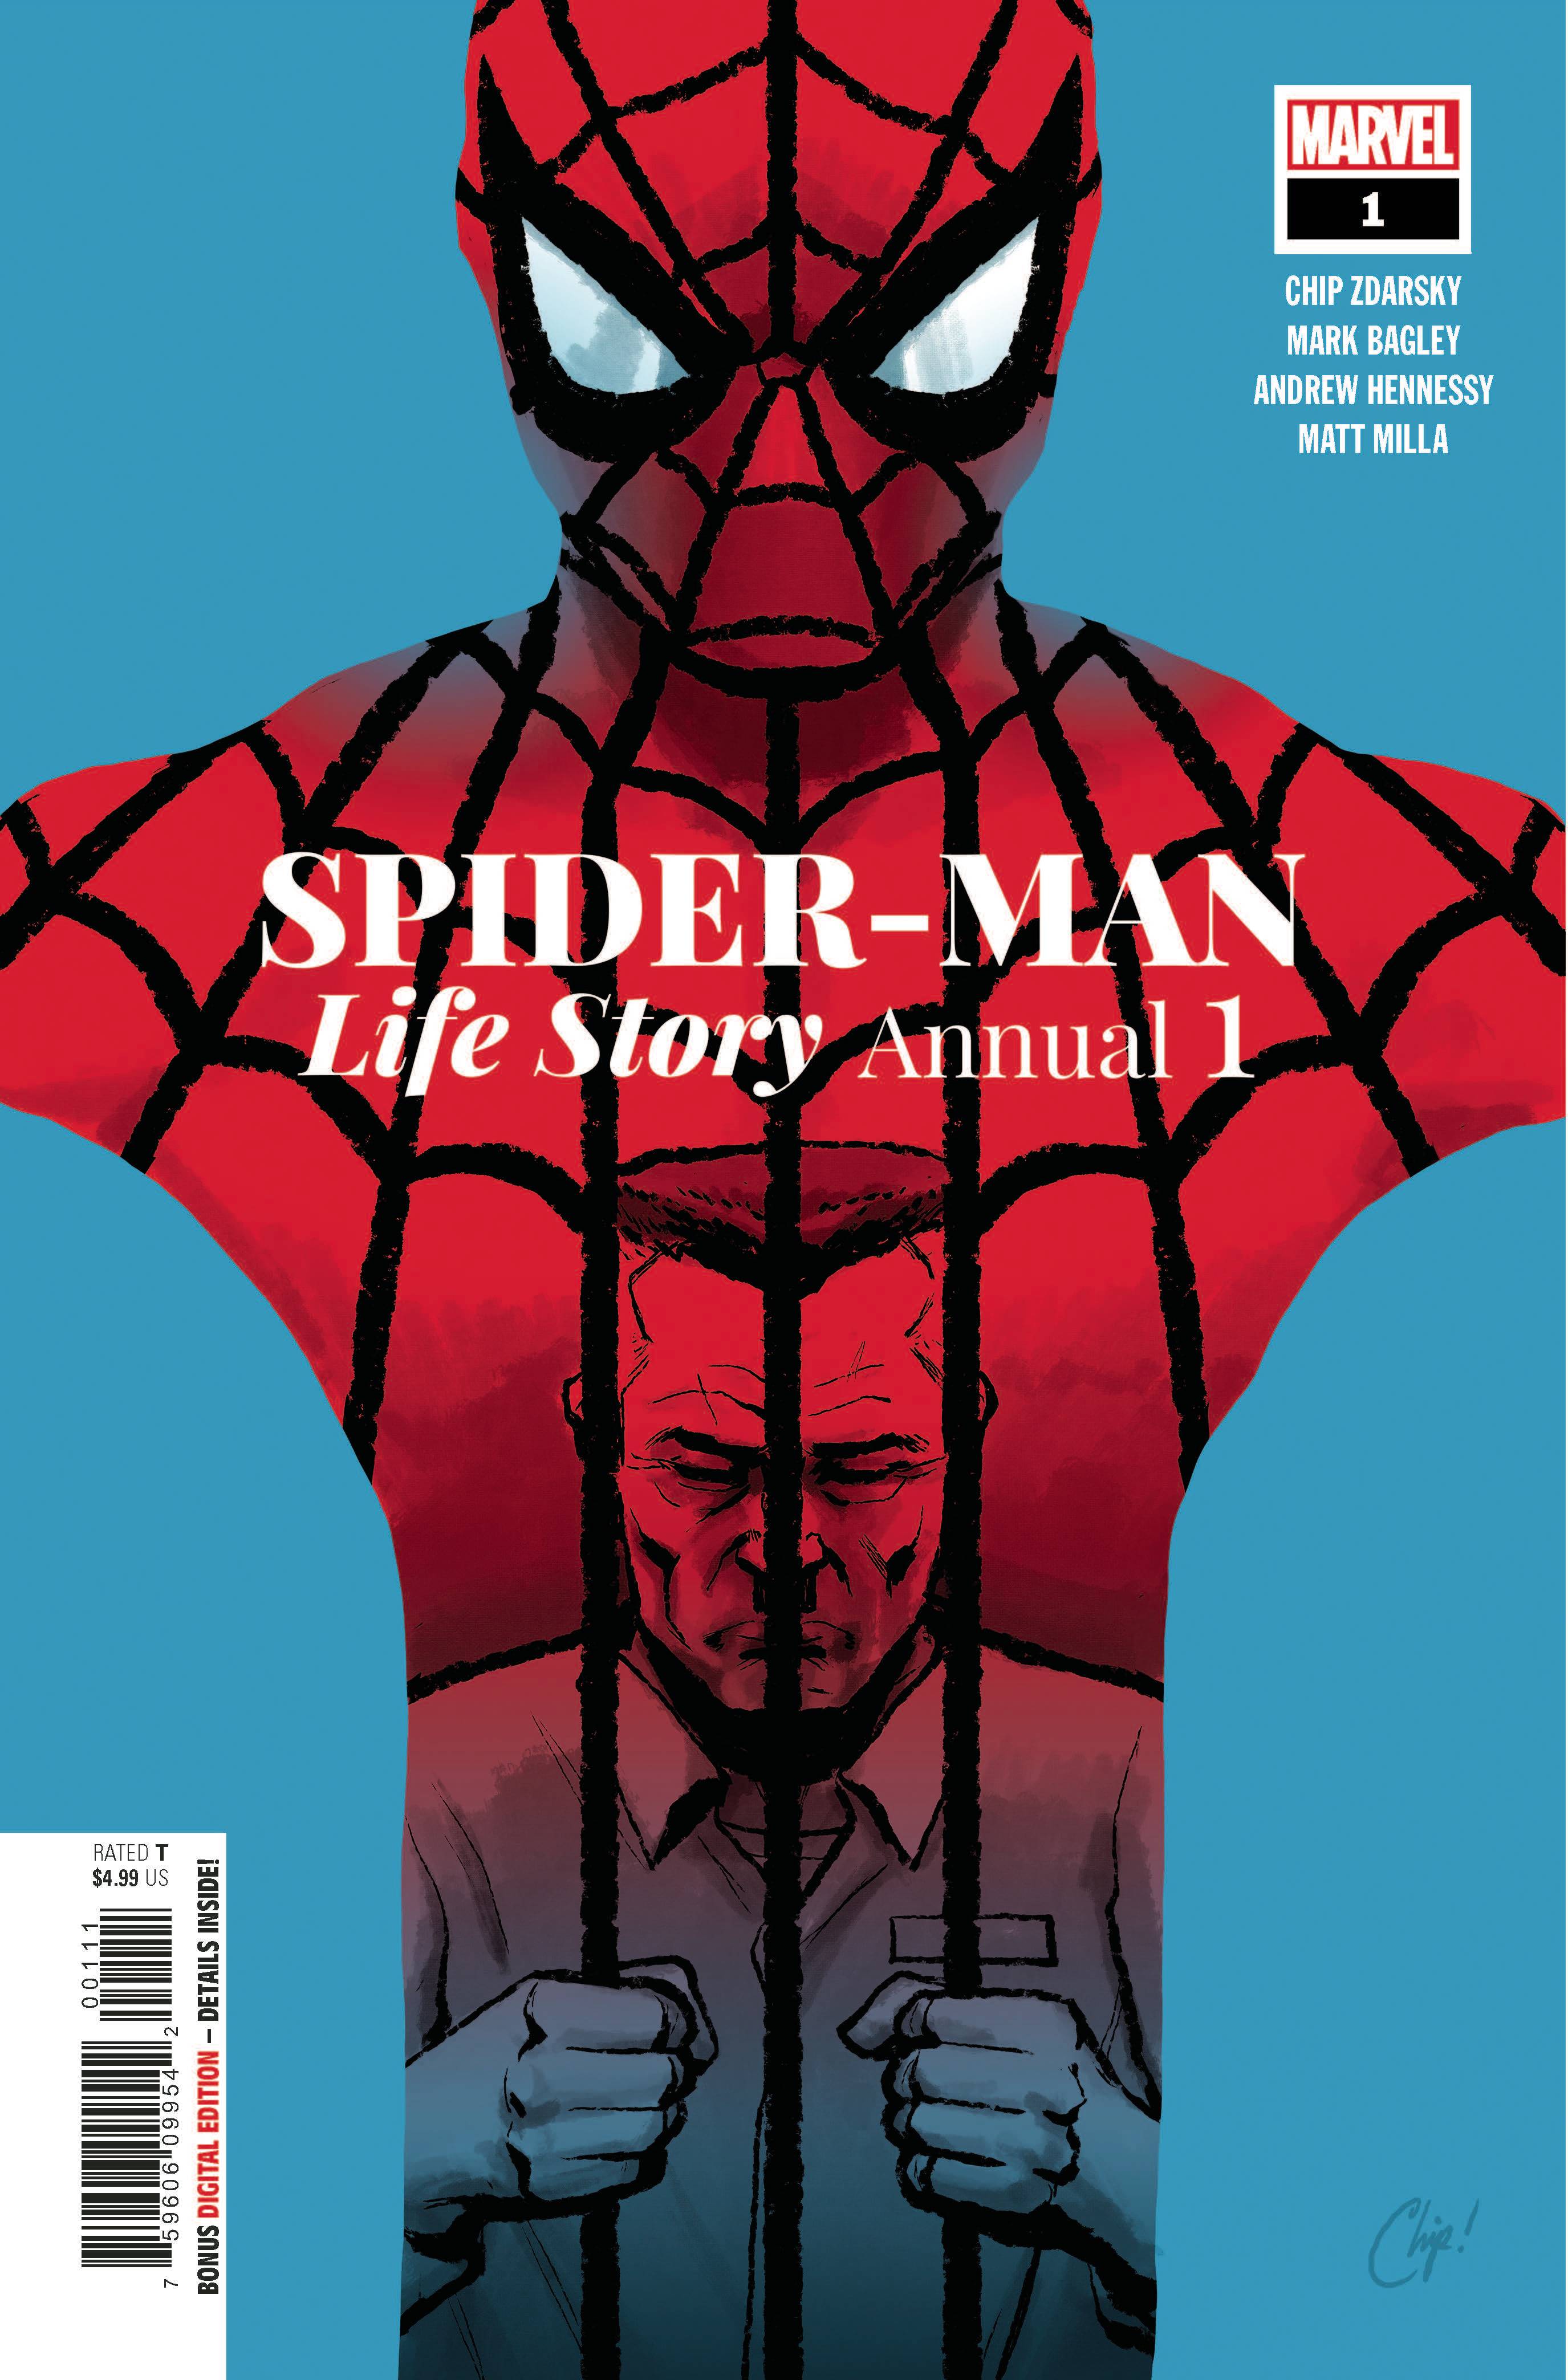 Spider man life story 1